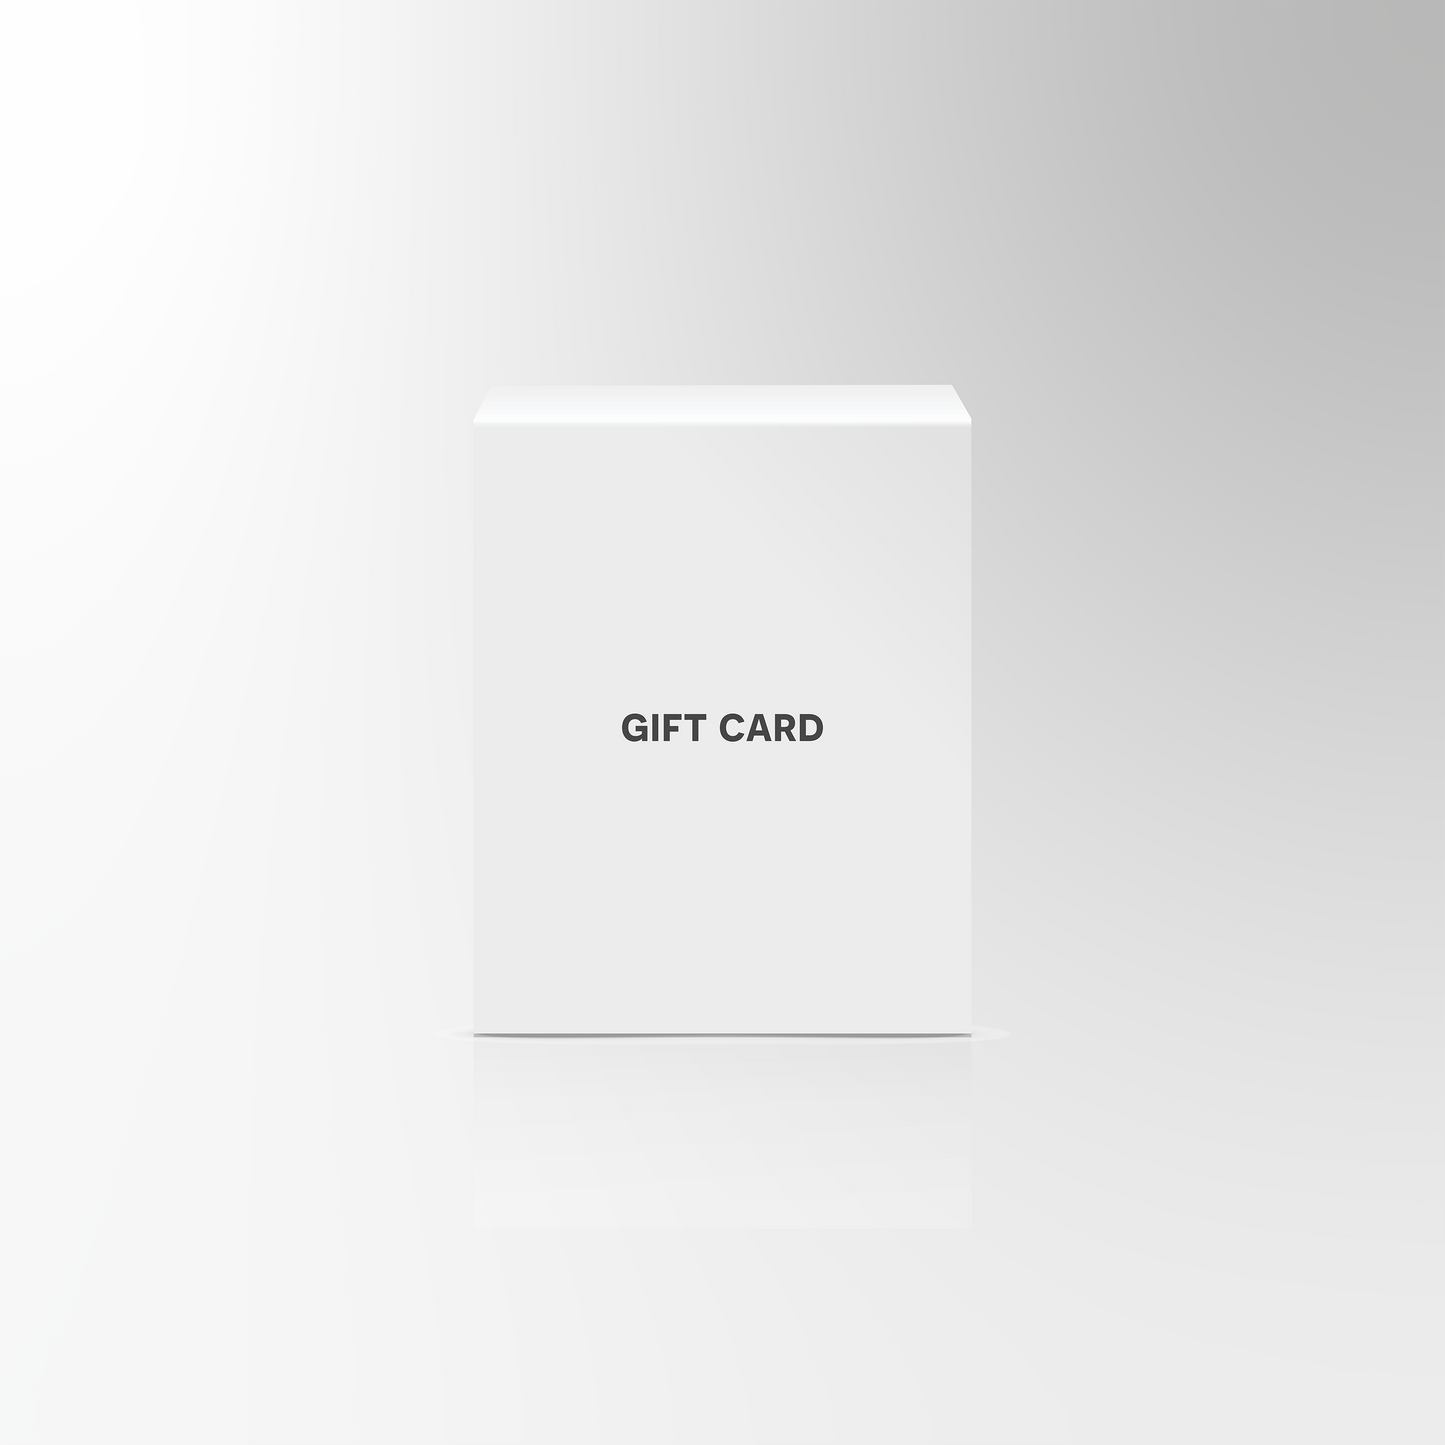 GIFT  CARD